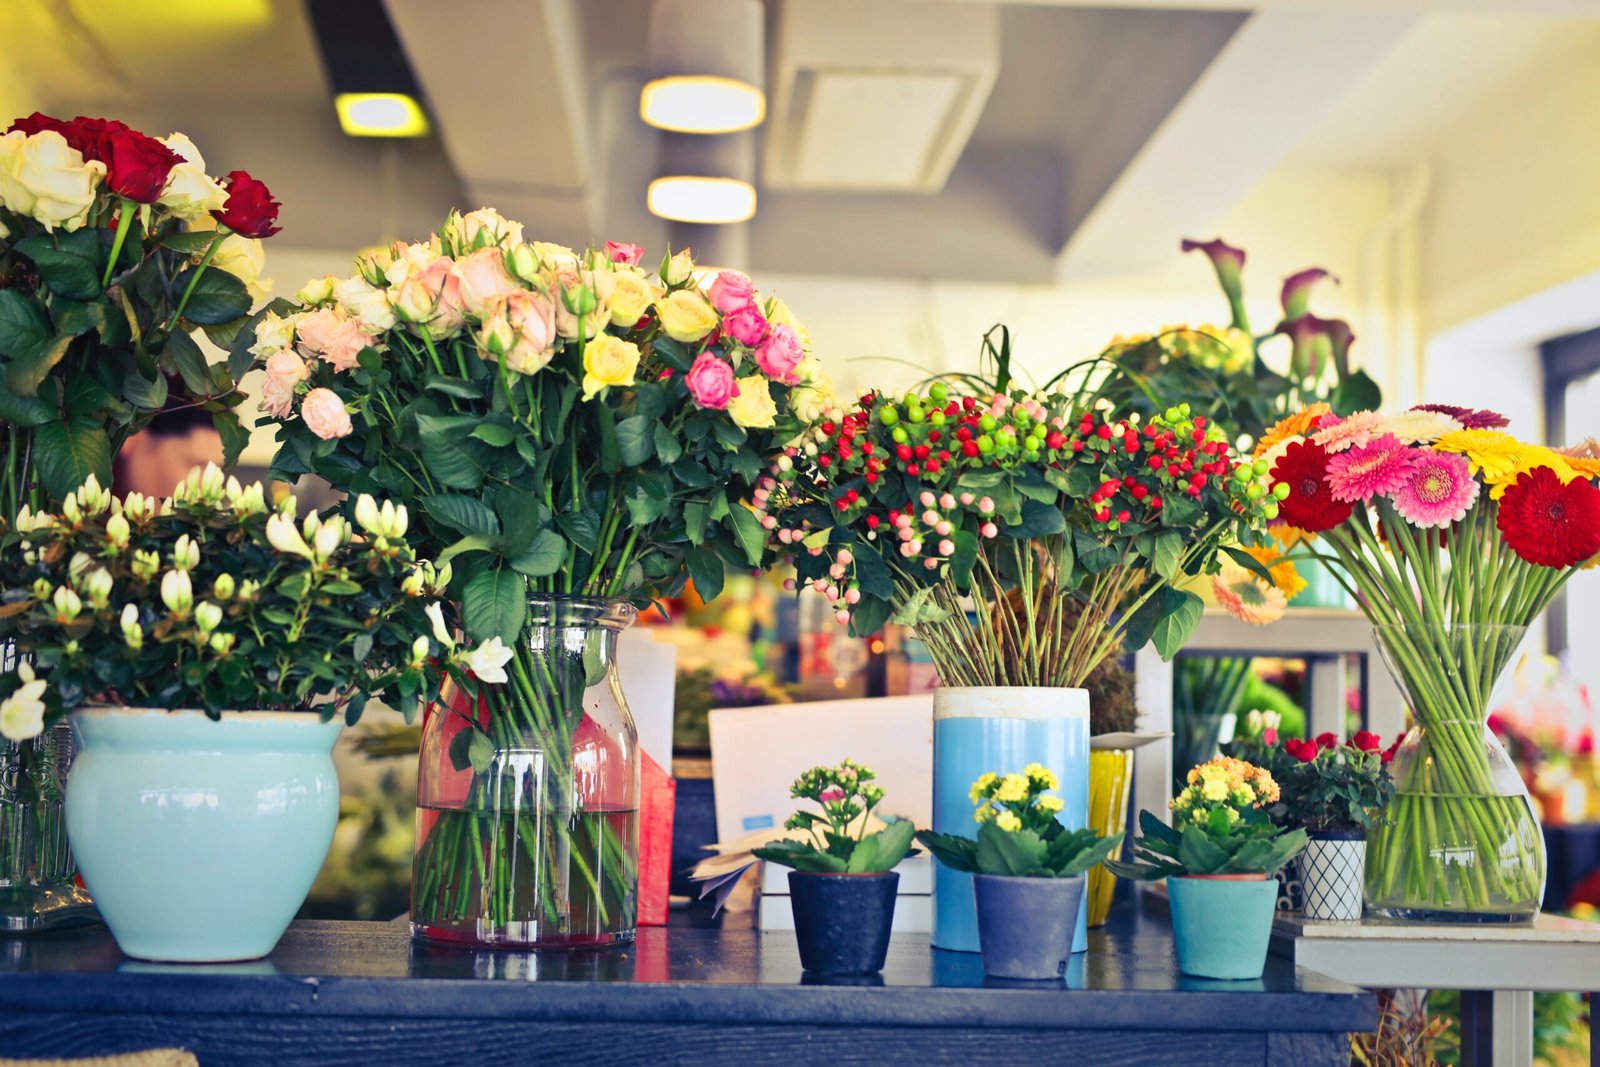 Local Independent Flower Shop